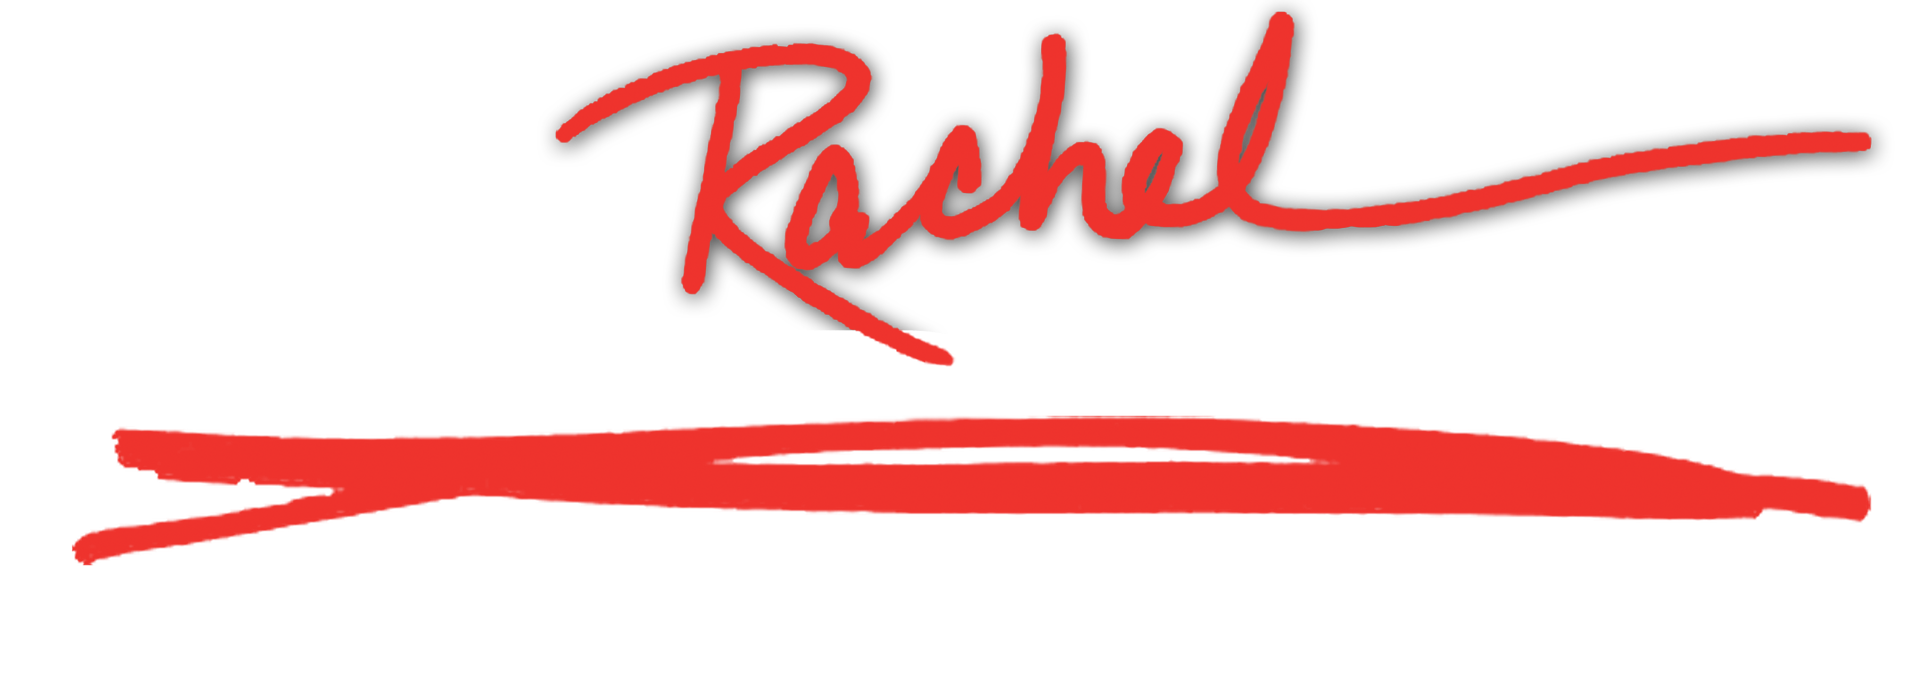 Rachel - Addict